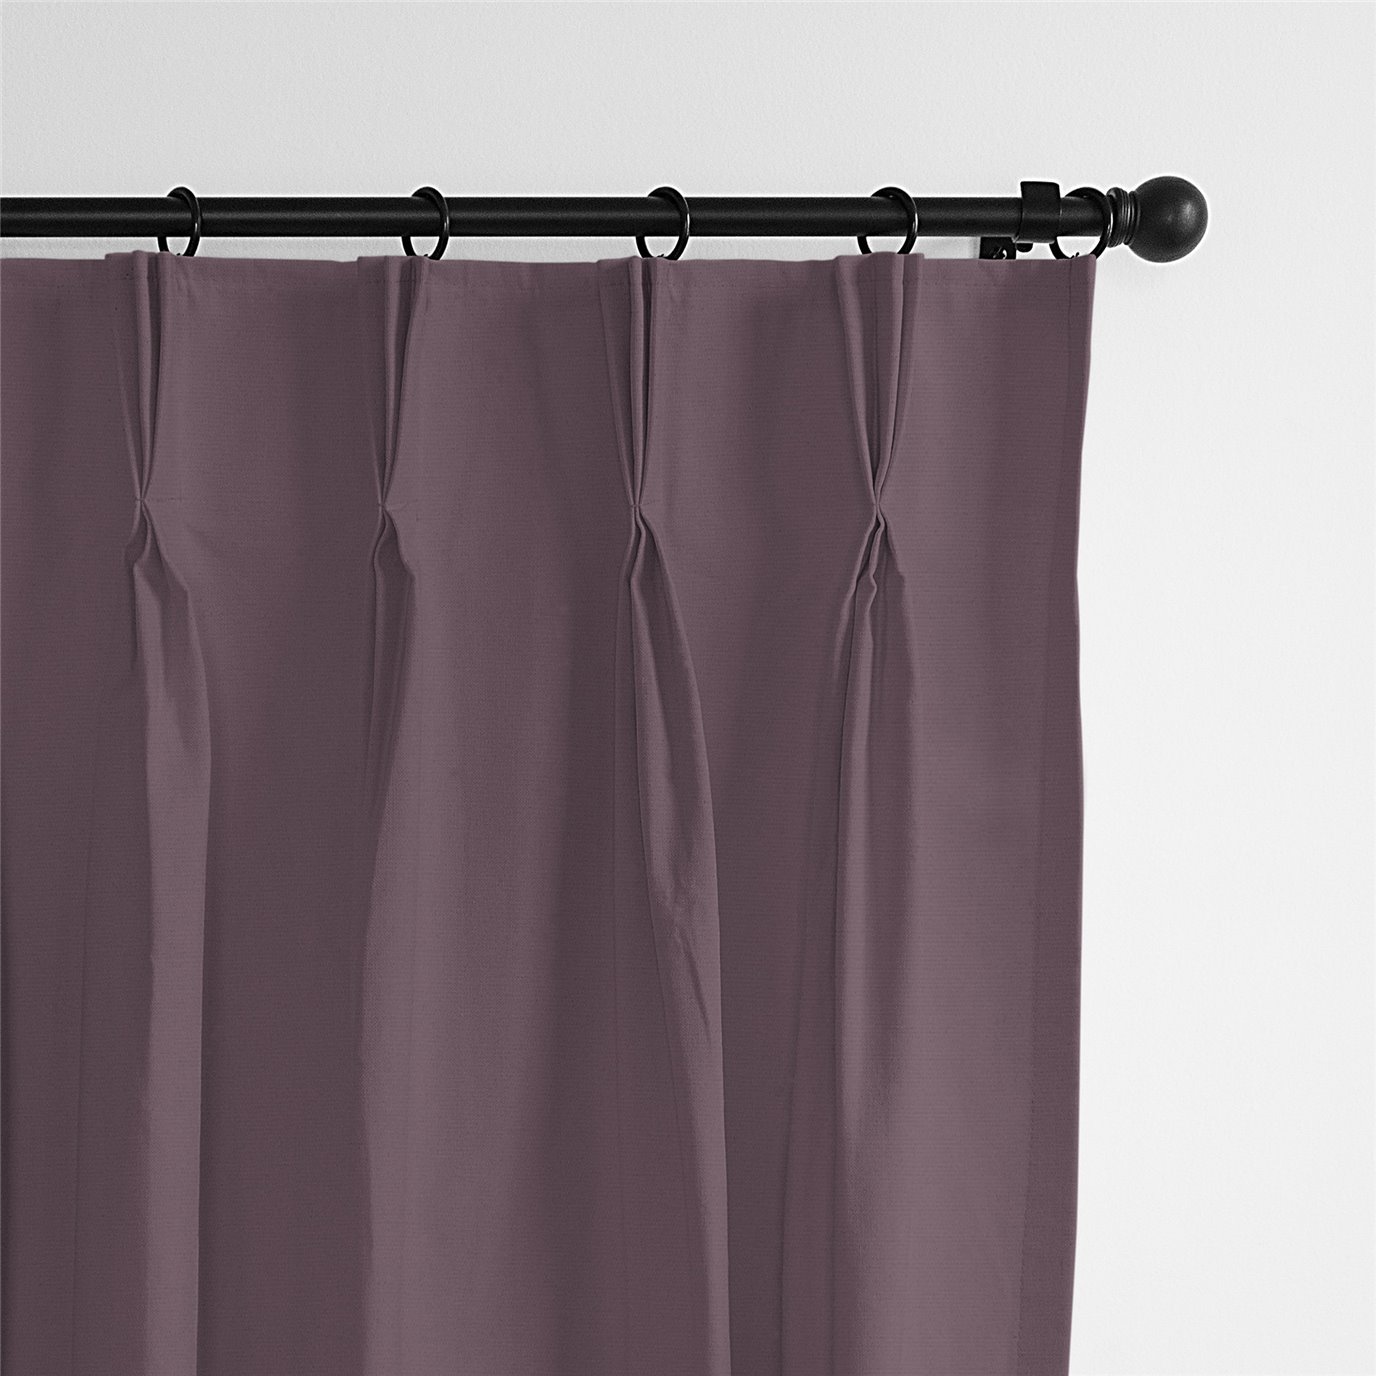 Braxton Purple Grape Pinch Pleat Drapery Panel - Pair - Size 20"x108"